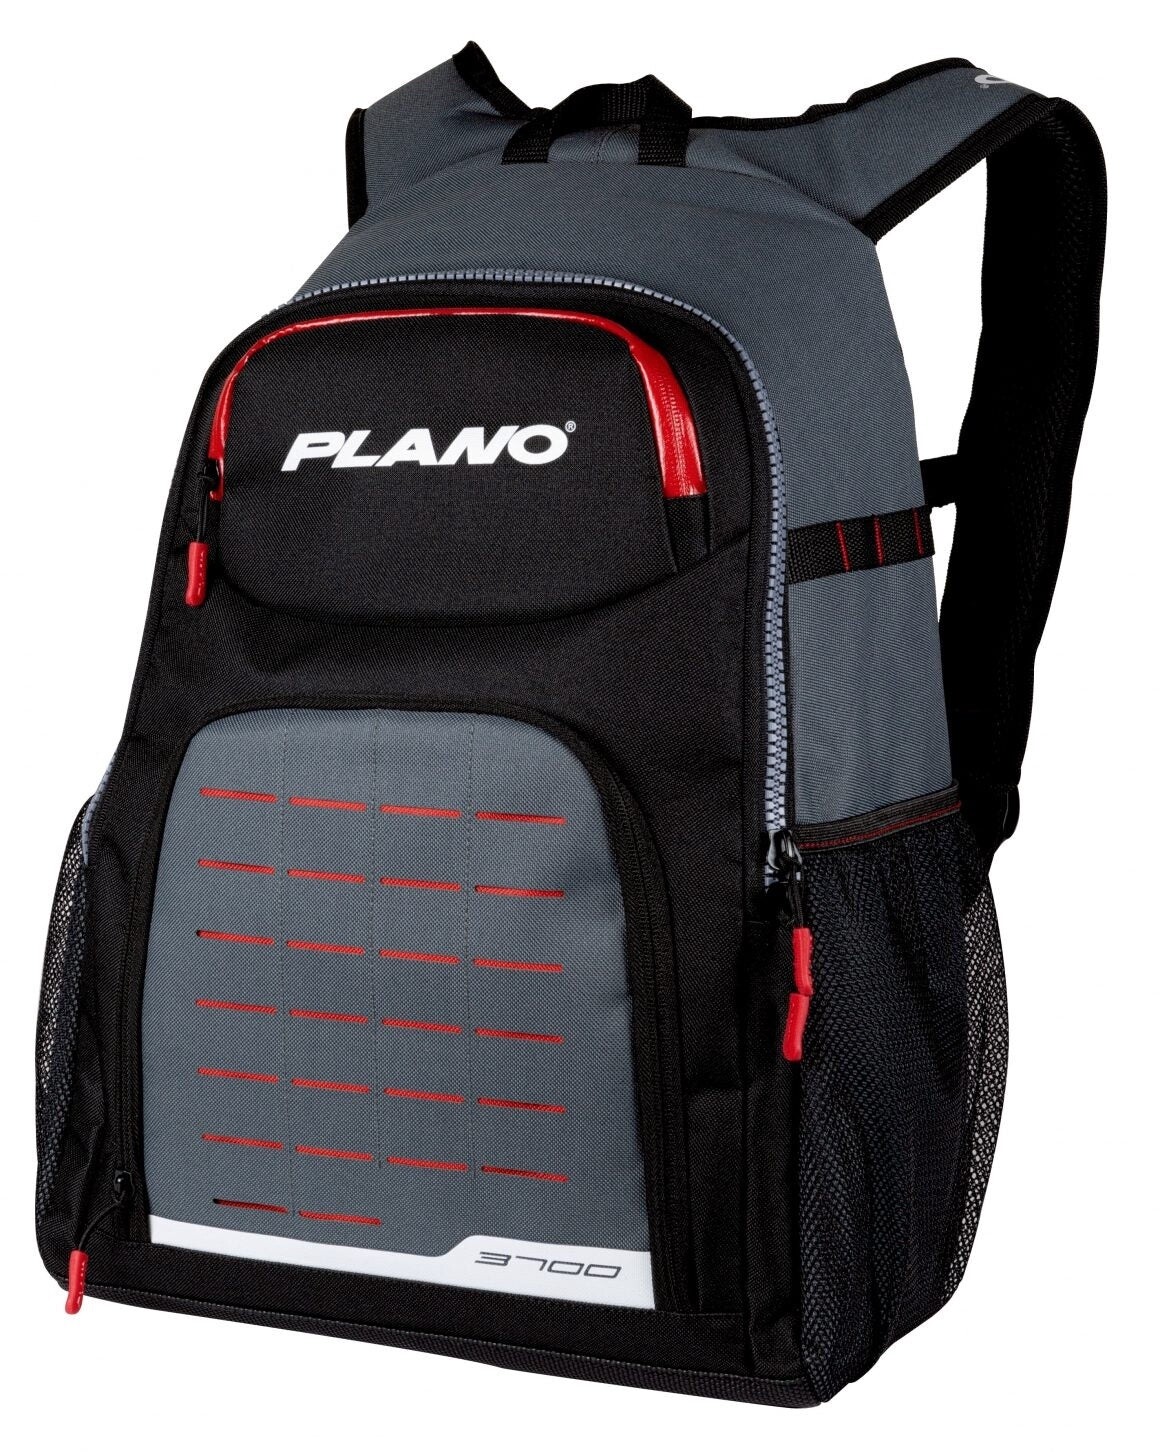 Plano Weekend Series 3700BA Backpack Tackle Box